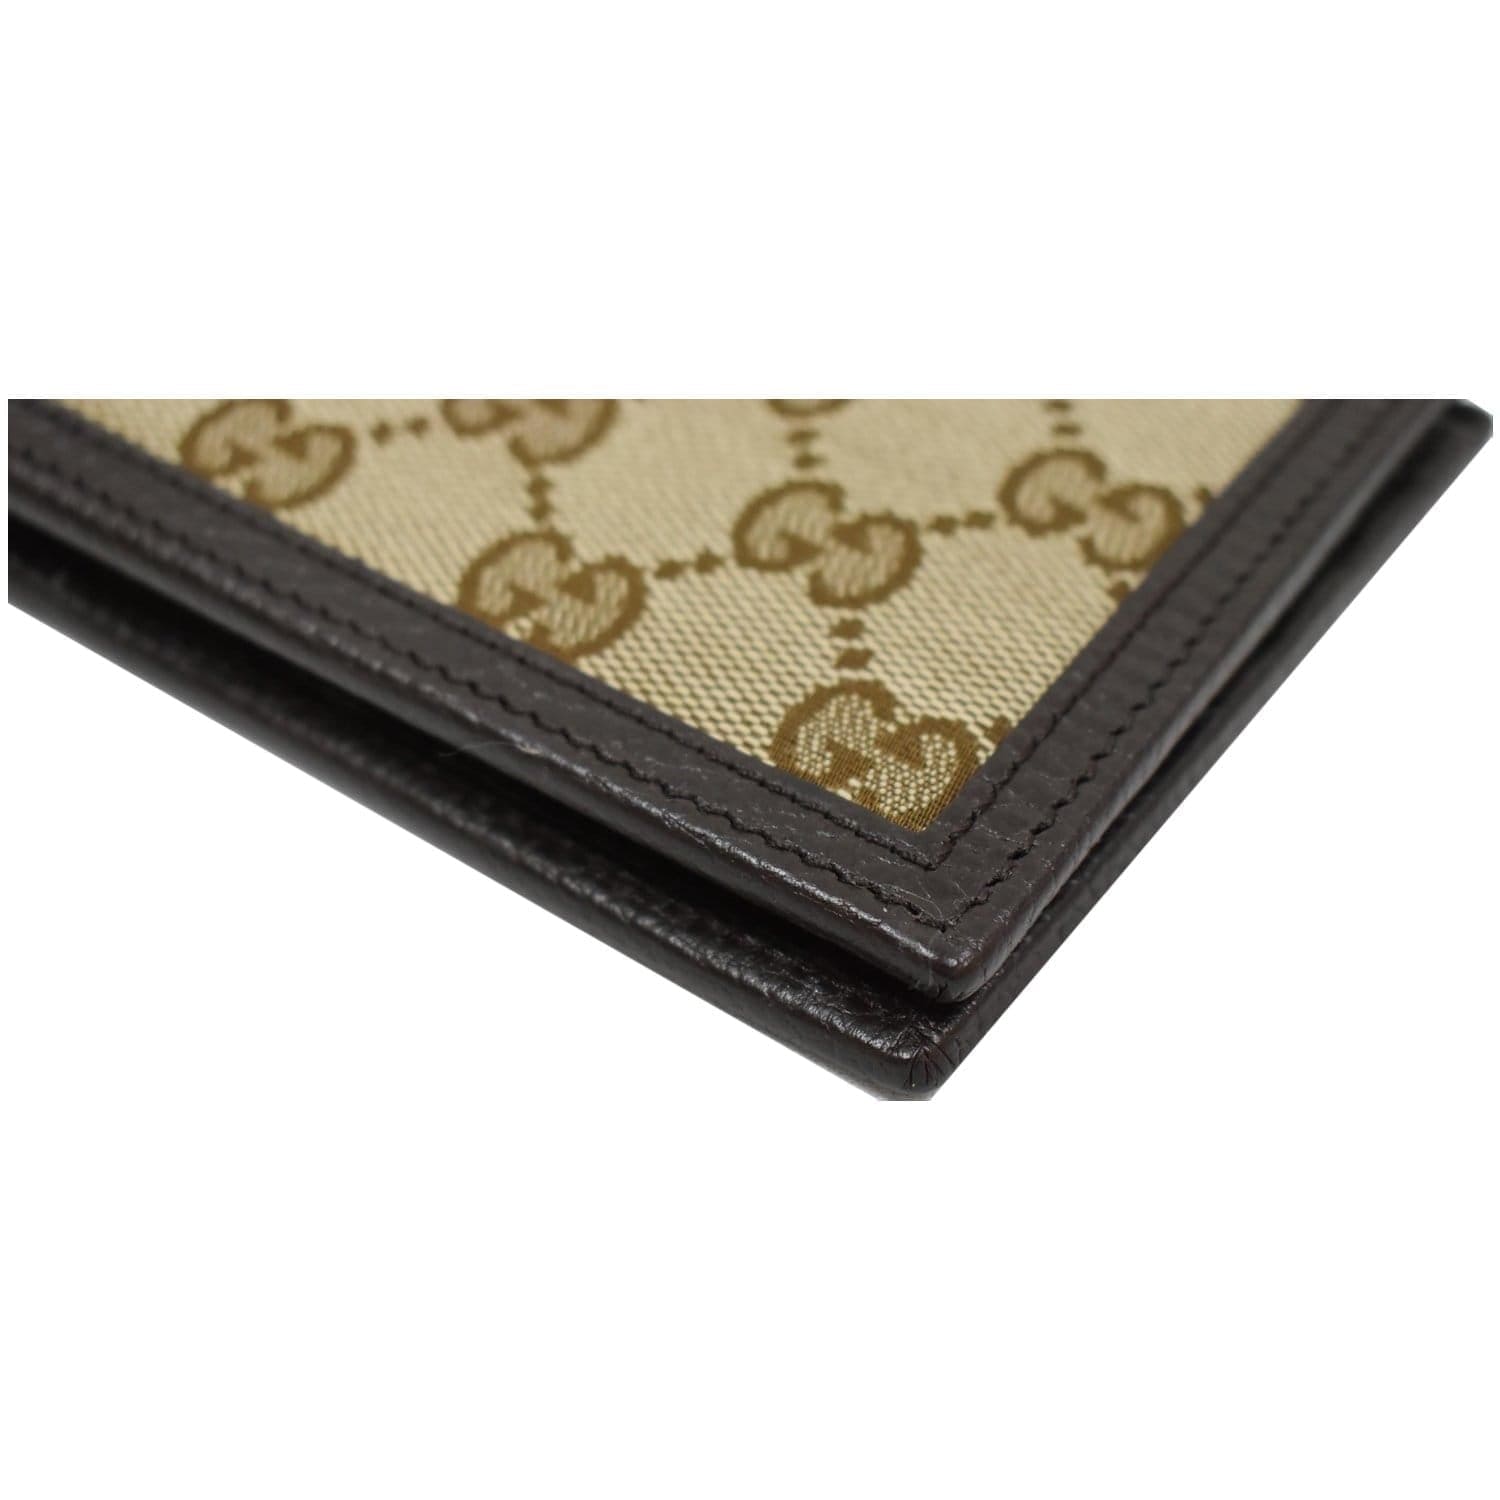 Gucci Original GG Canvas Leather Men's Bifold Wallet 260987 9903 Brown/Beige Box New